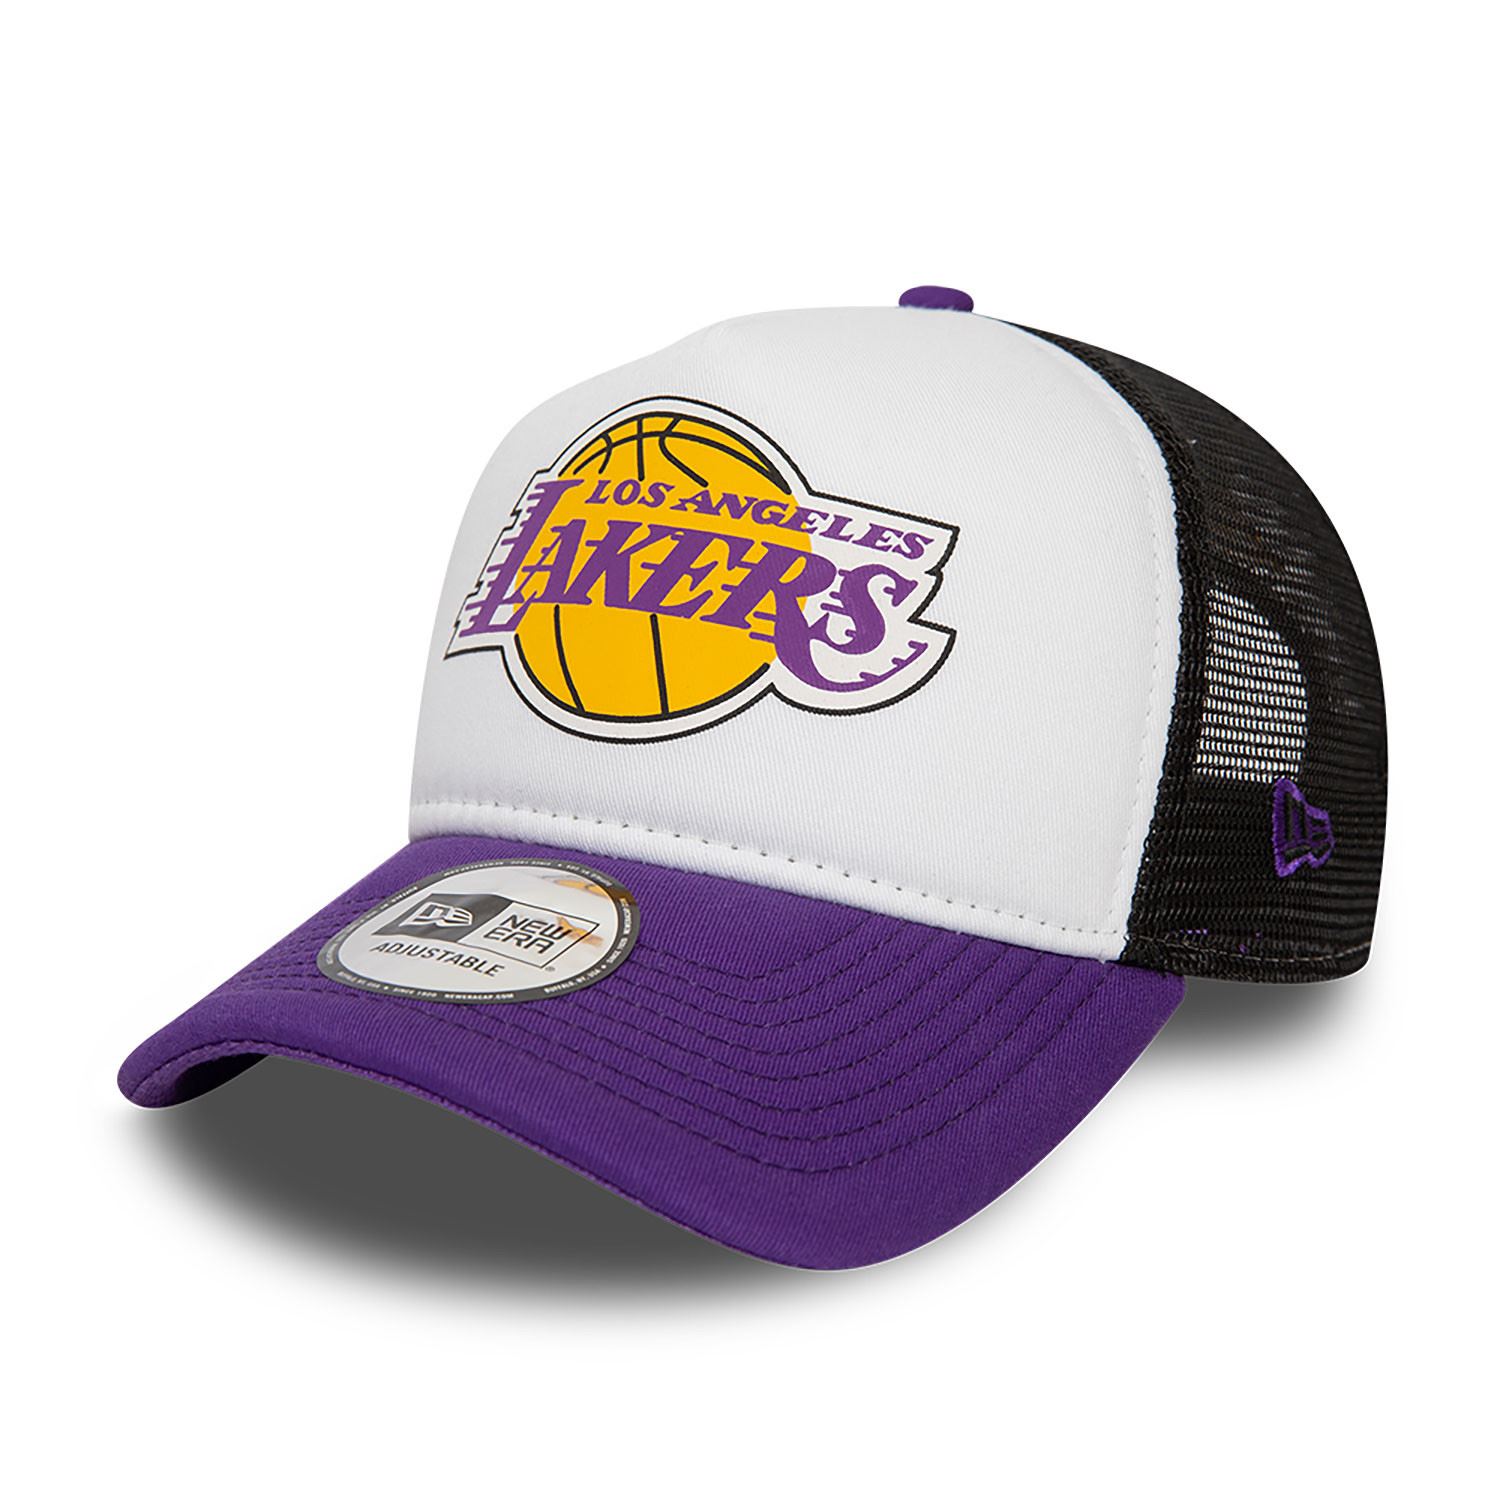 Los Angeles Lakers Team Colour Block White Purple A-Frame Adjustable Trucker Cap New Era 